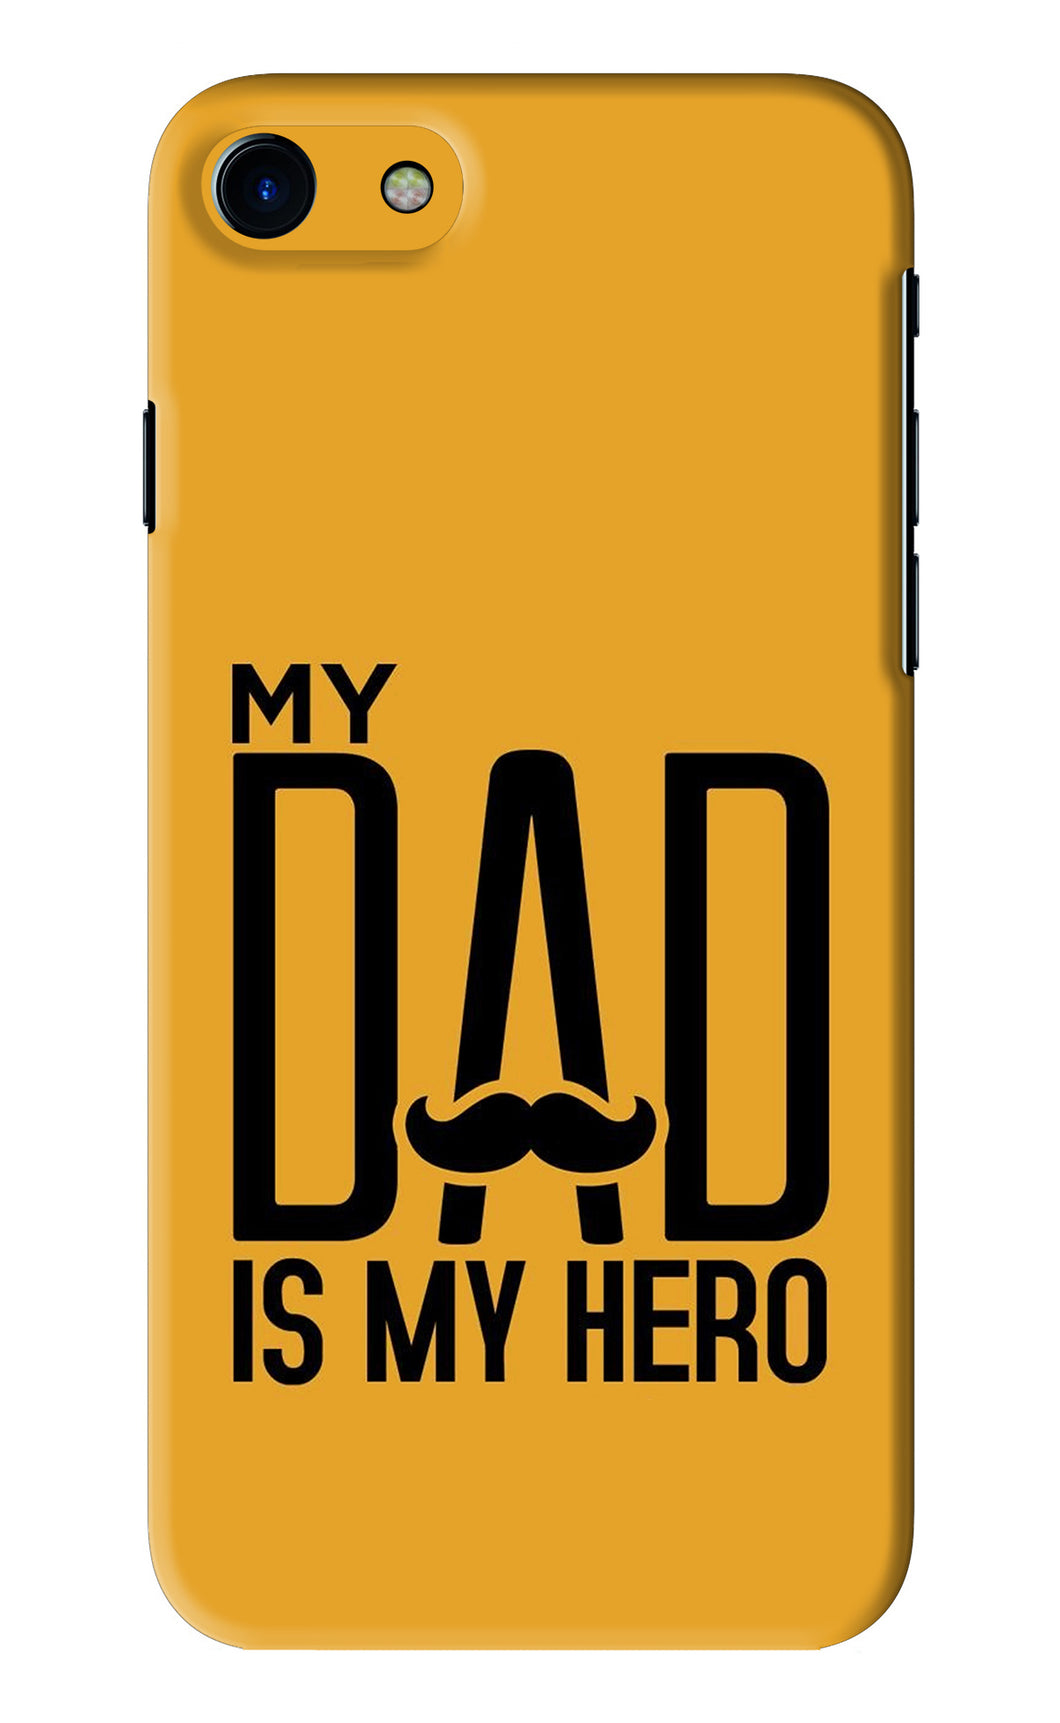 My Dad Is My Hero iPhone 7 Back Skin Wrap